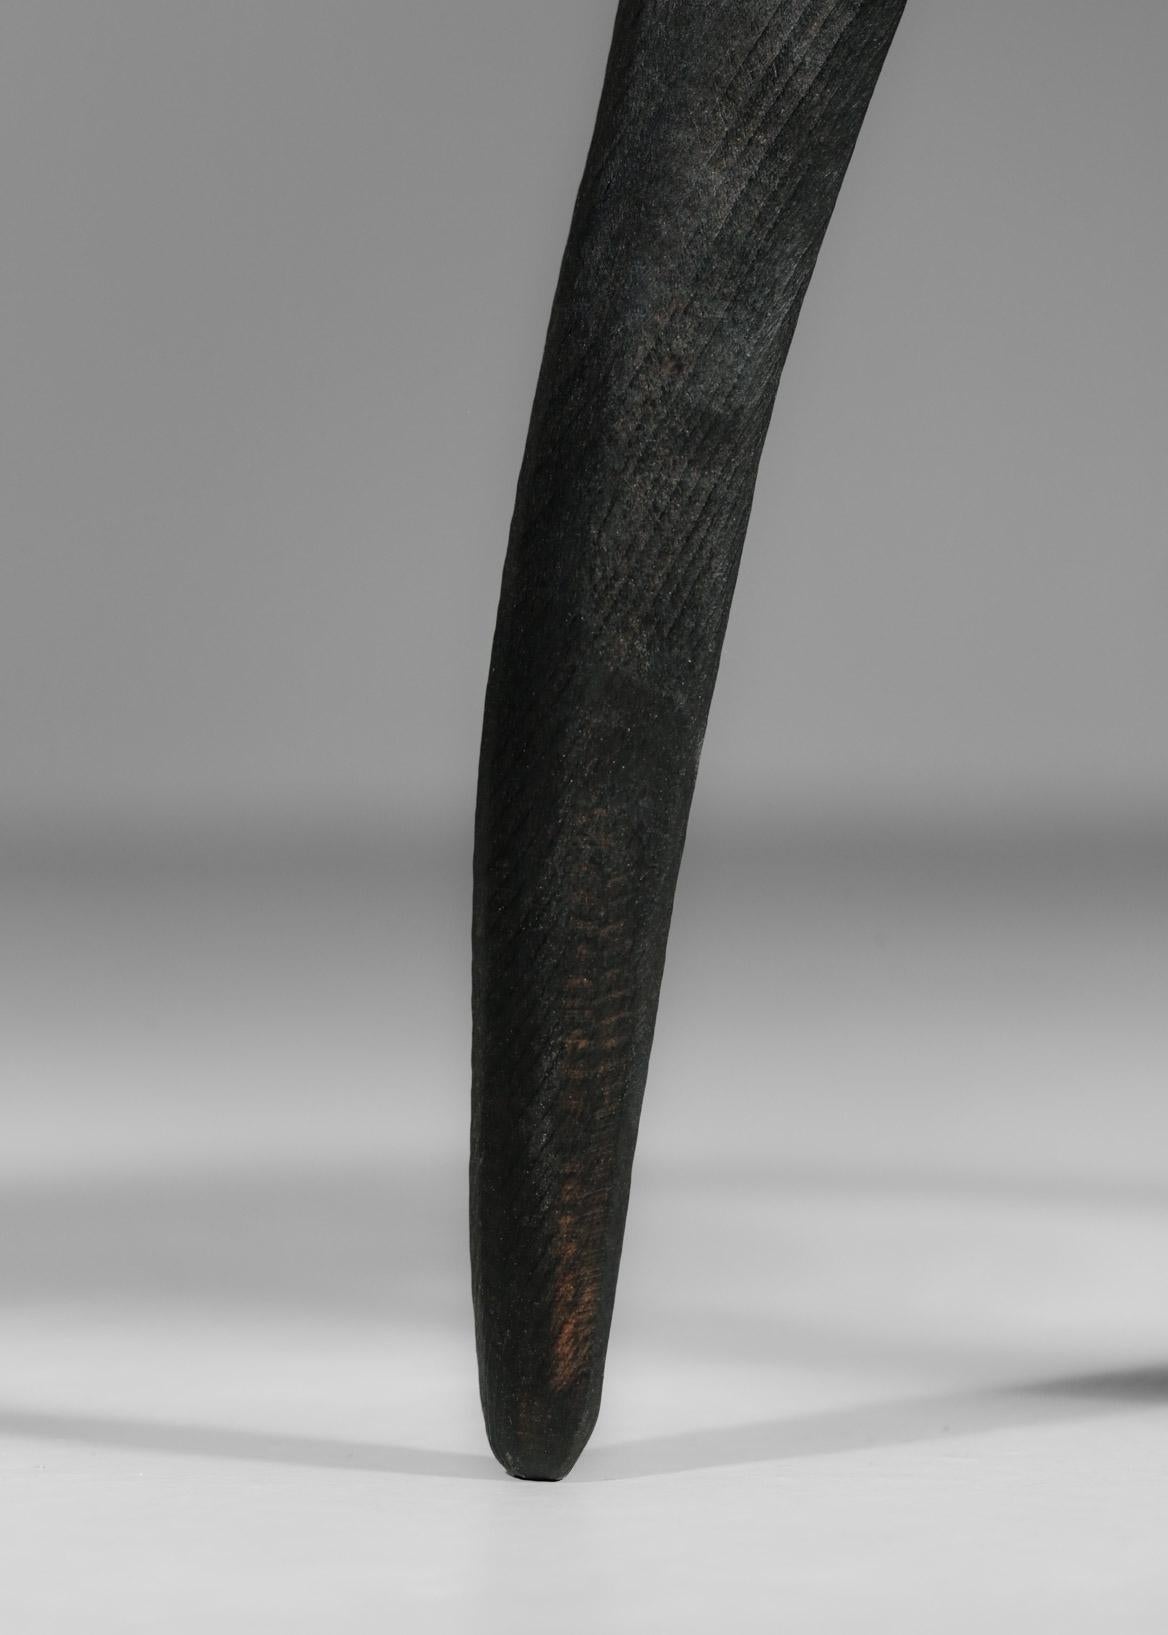 Modern Handcrafted Modern Stool by Vincent Vincent For Sale 2